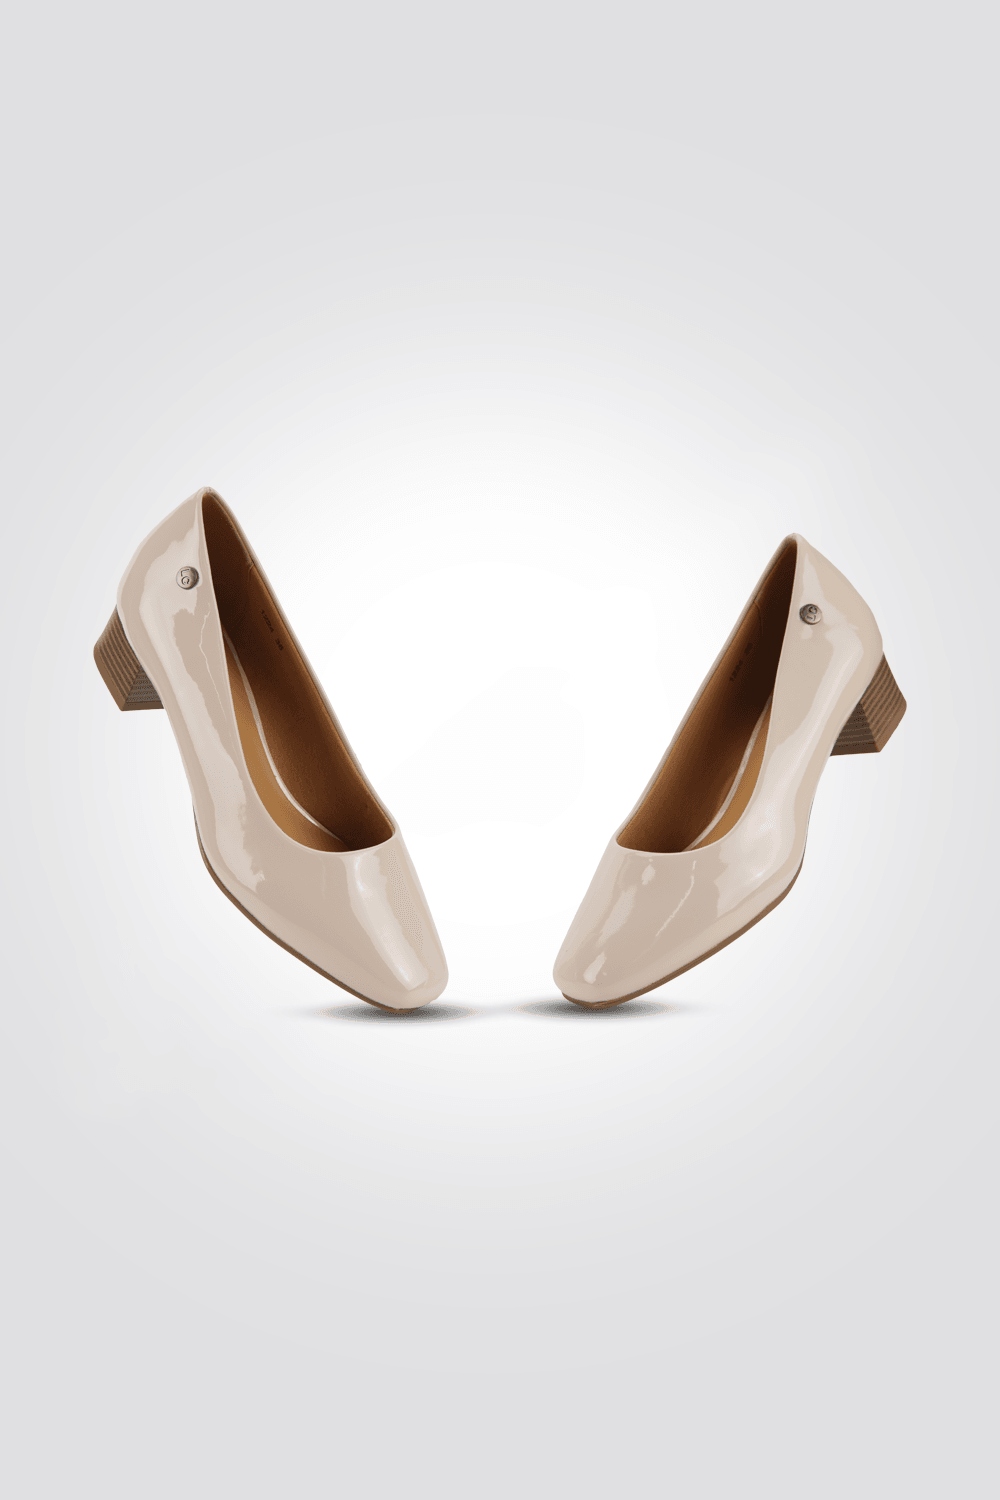 LADY COMFORT - נעל עקב חרטום מרובע בצבע בז' לקה - MASHBIR//365